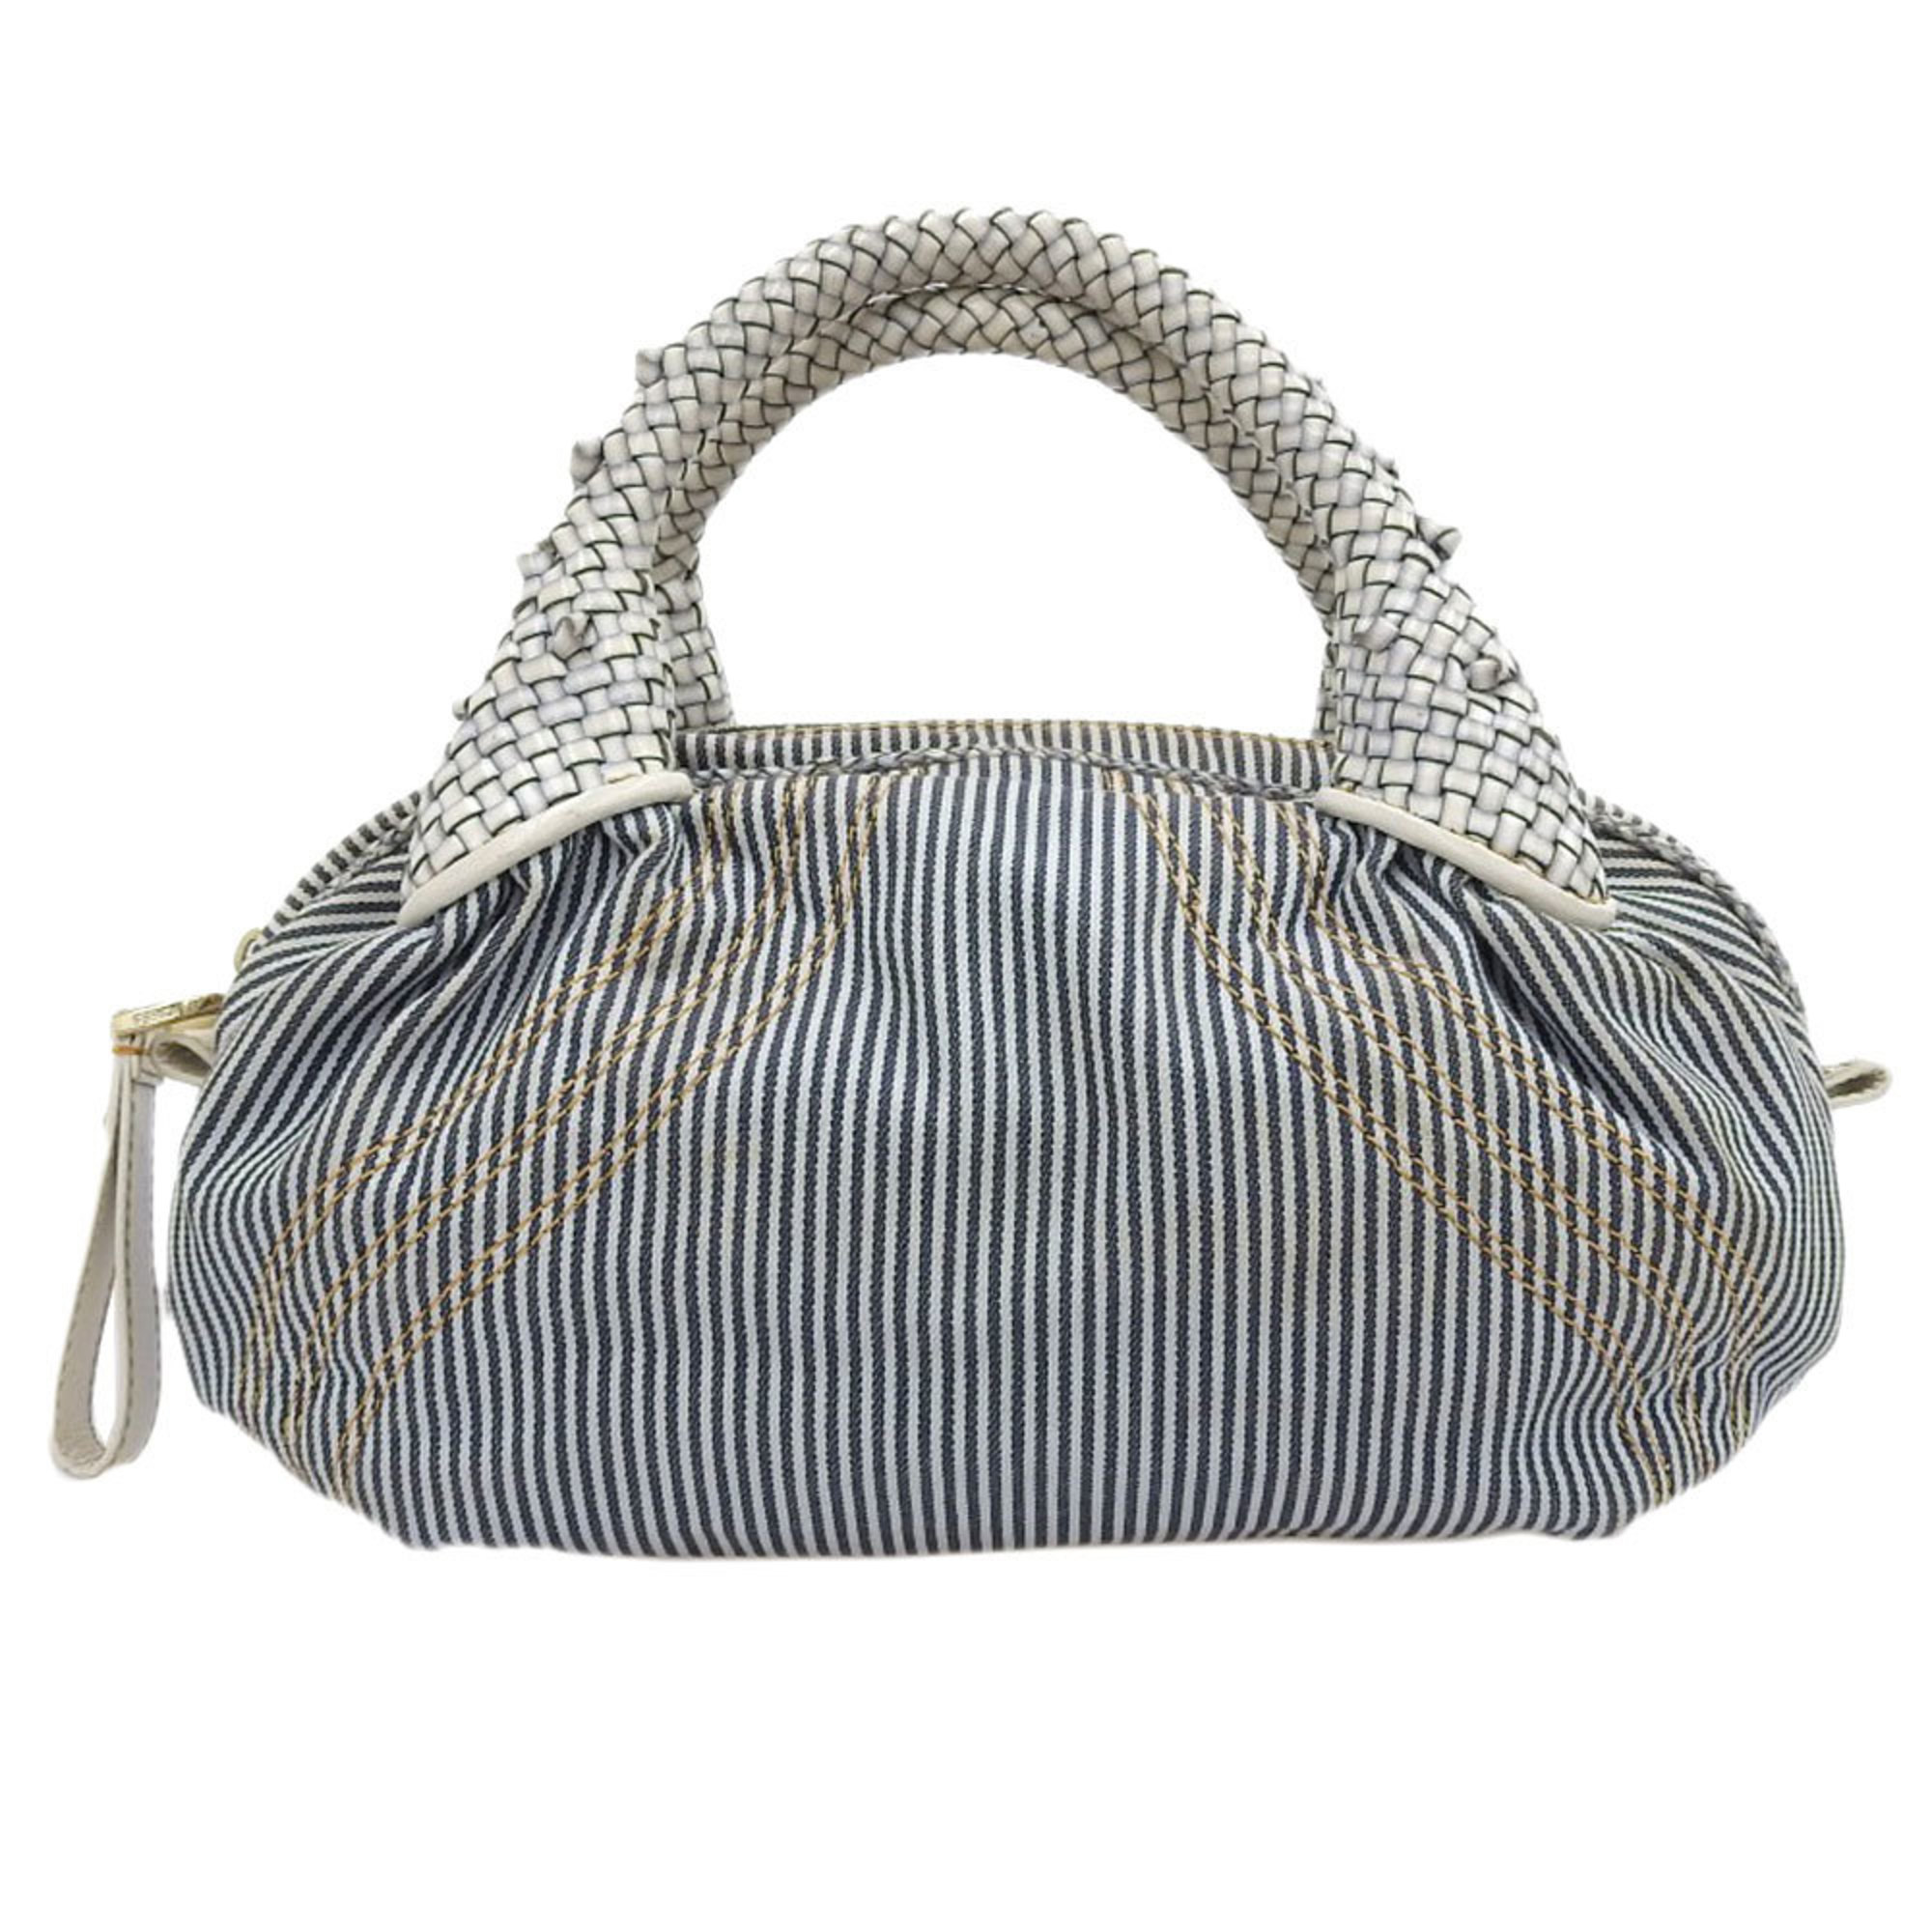 Fendi FENDI mini spy bag handbag canvas leather white blue 8BL078